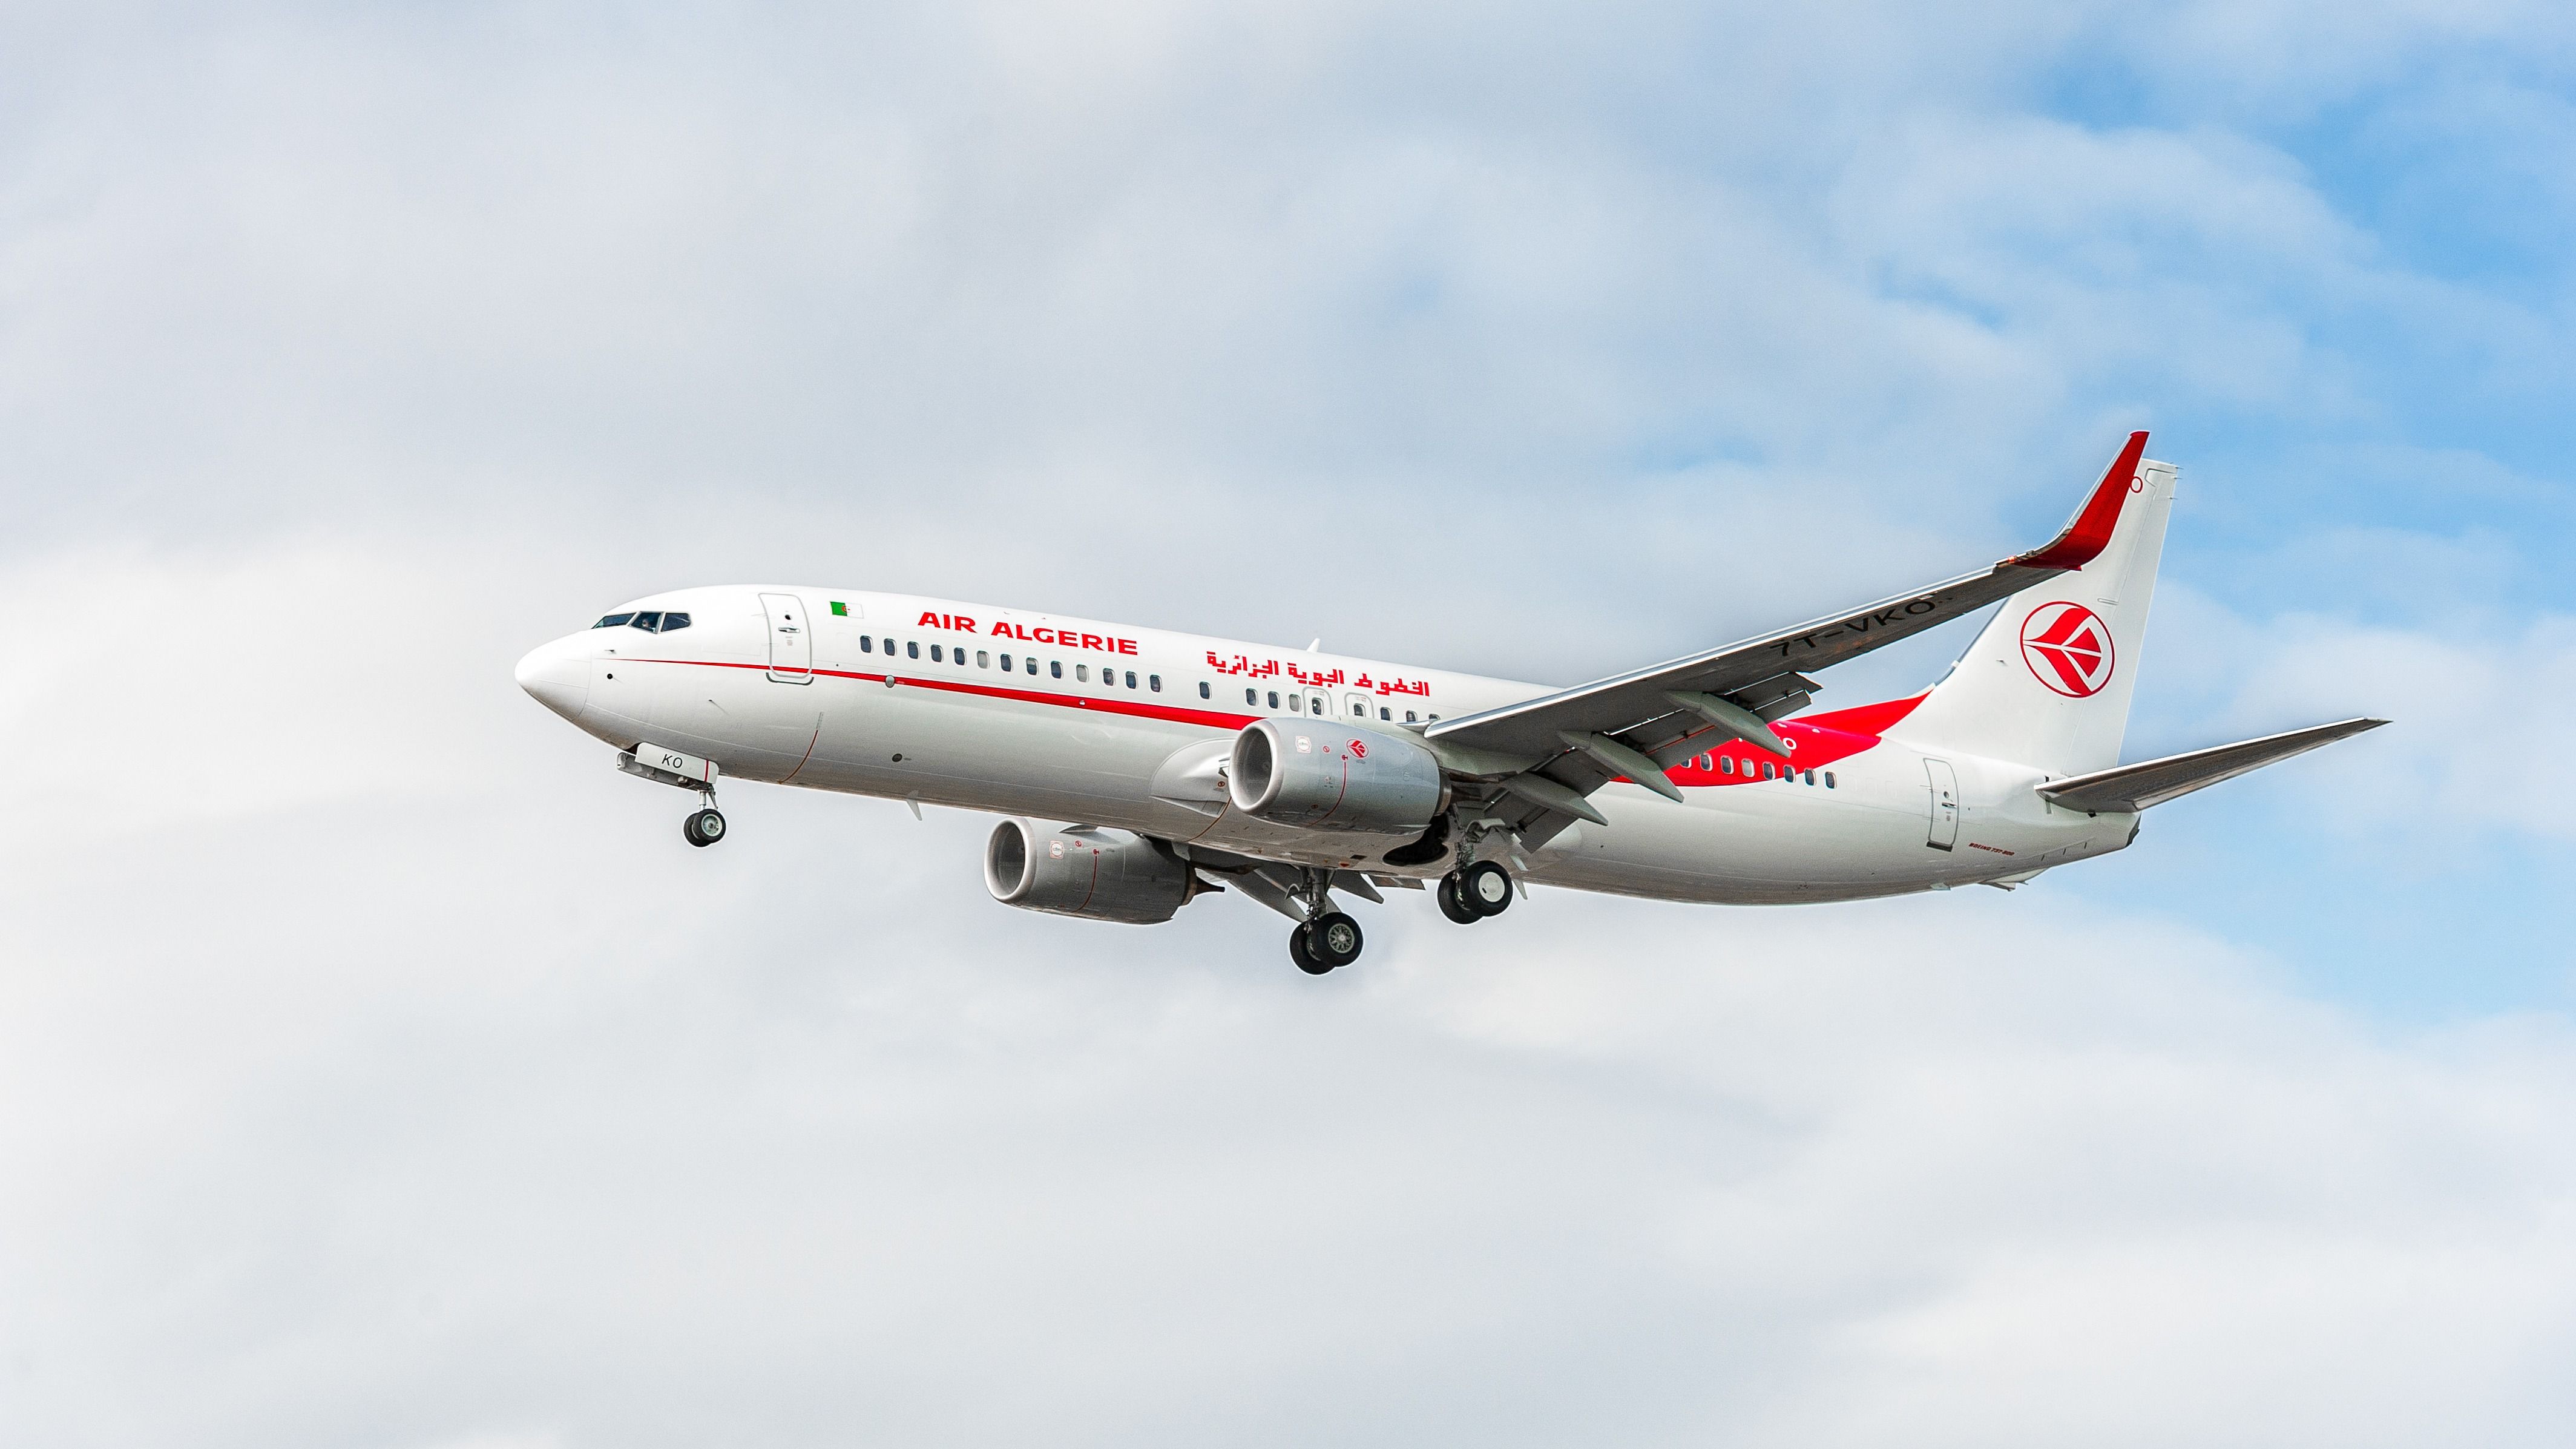 Air Algerie Boeing 737 landing at Heathrow